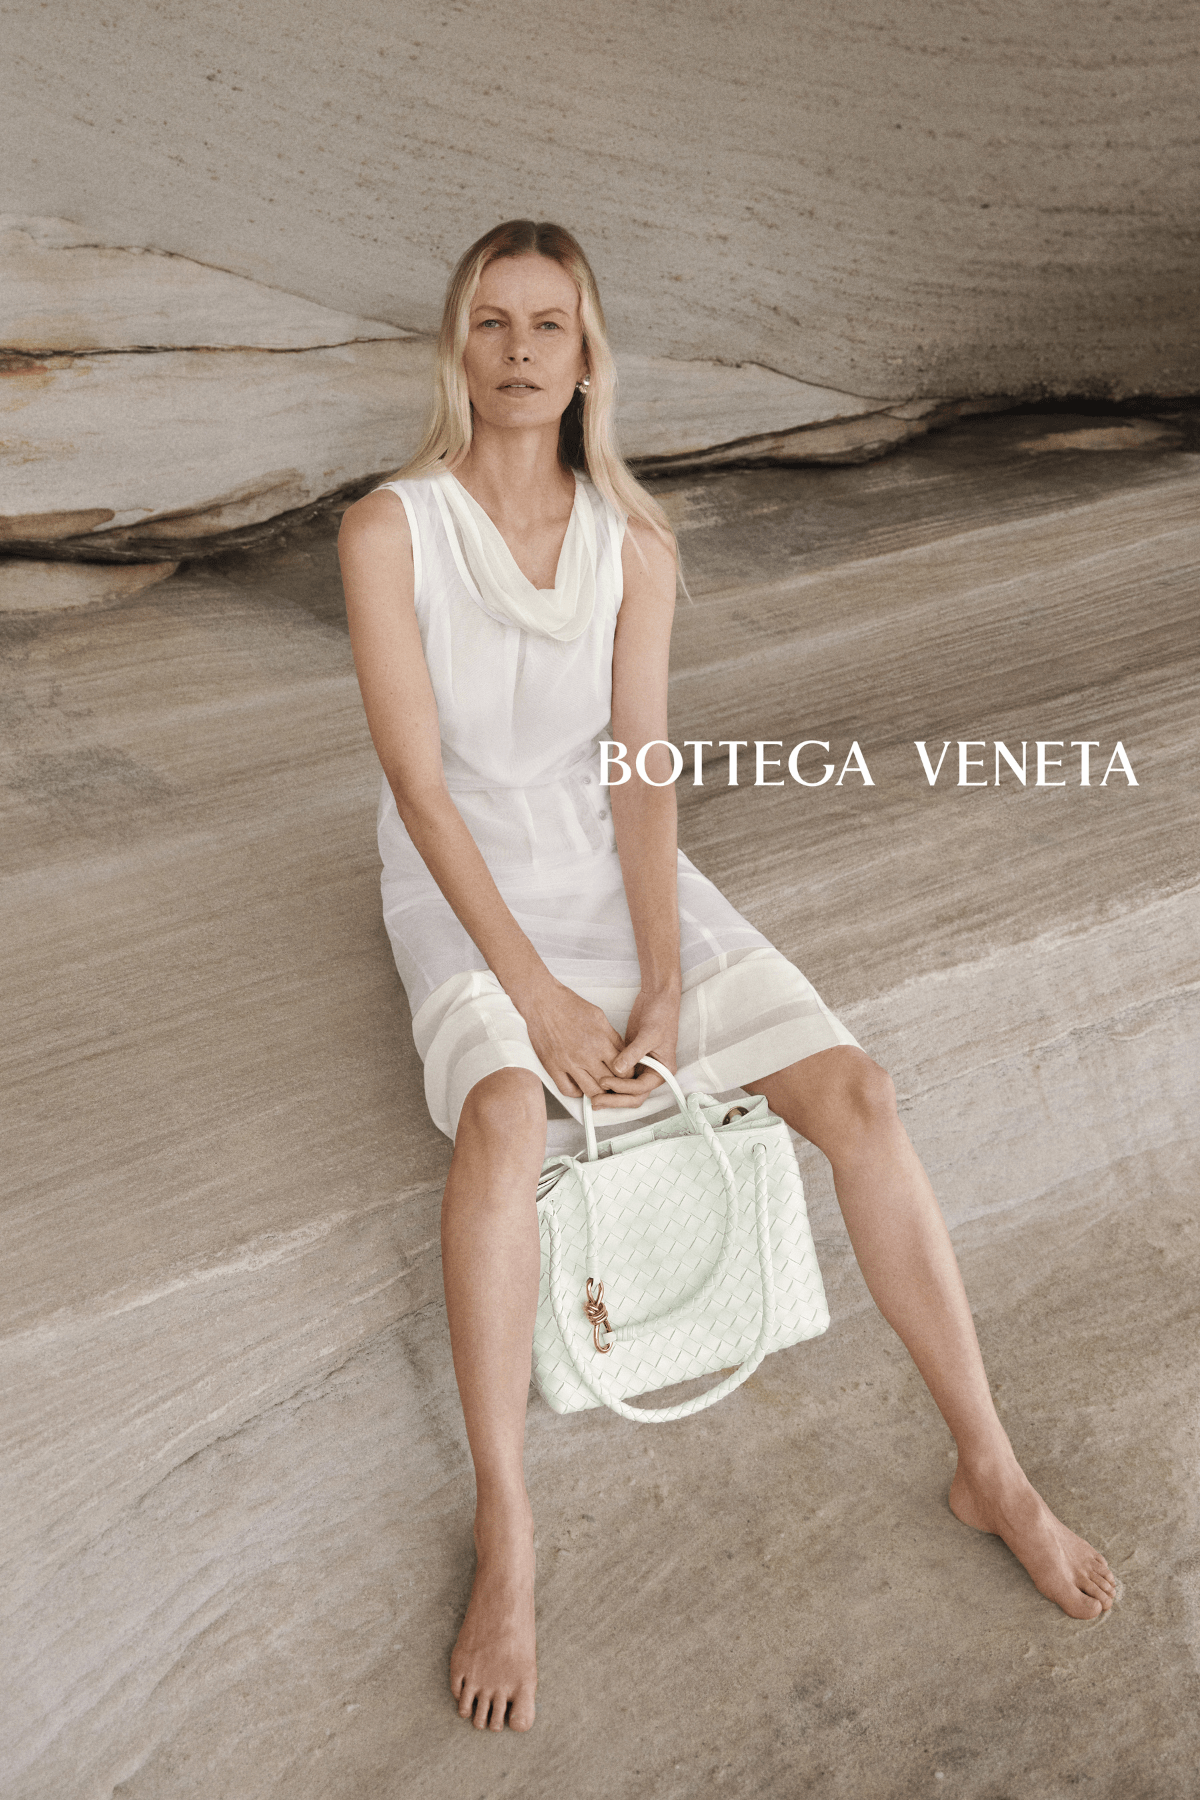 Which Bottega Veneta Bag Should I Buy?